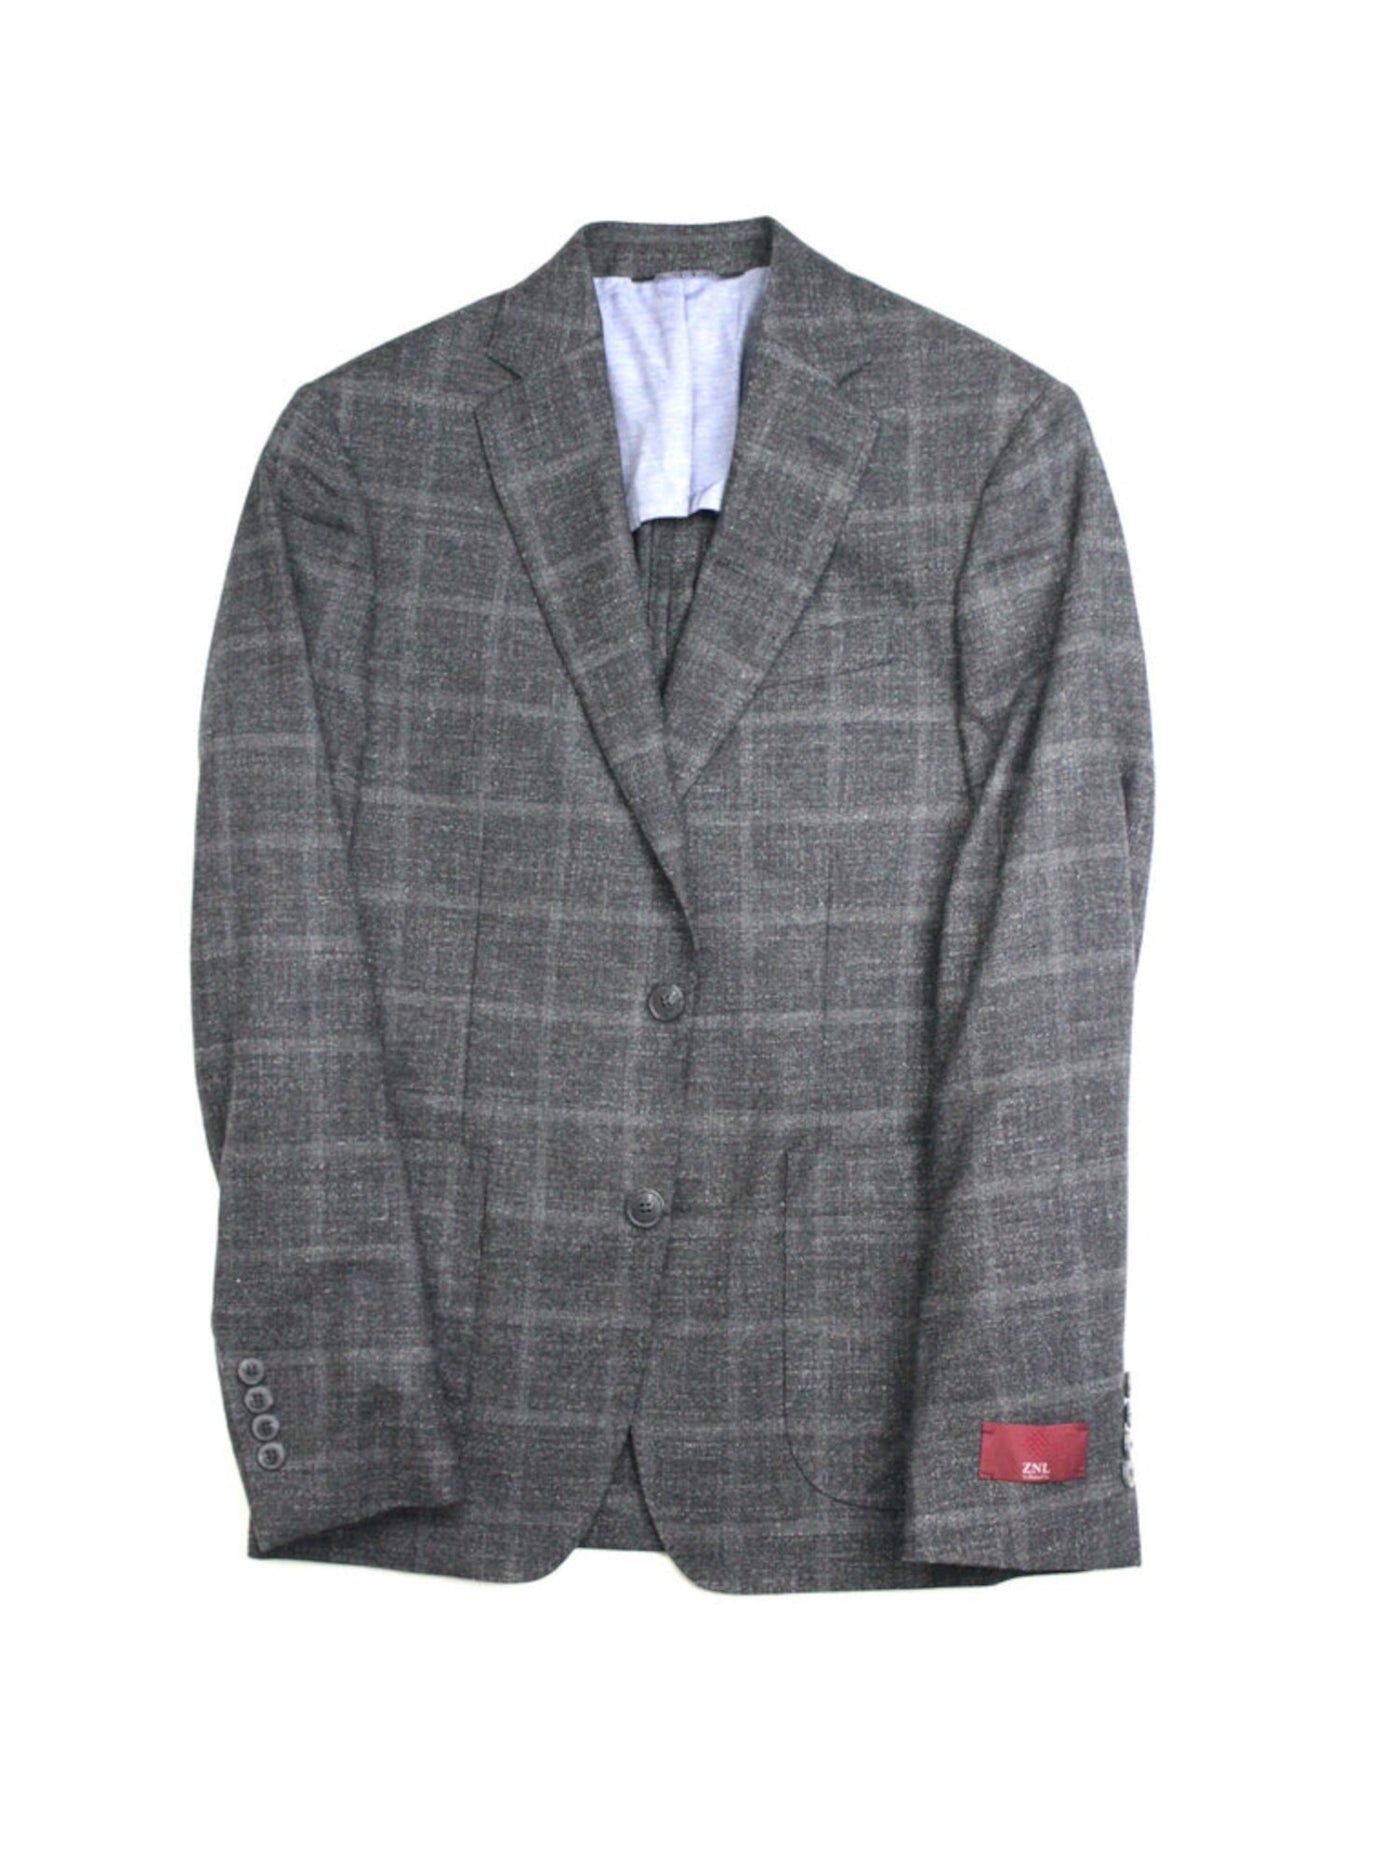 ZANELLA Mens Gray Single Breasted, Plaid Regular Fit Wool Blend Sport Coat 42R